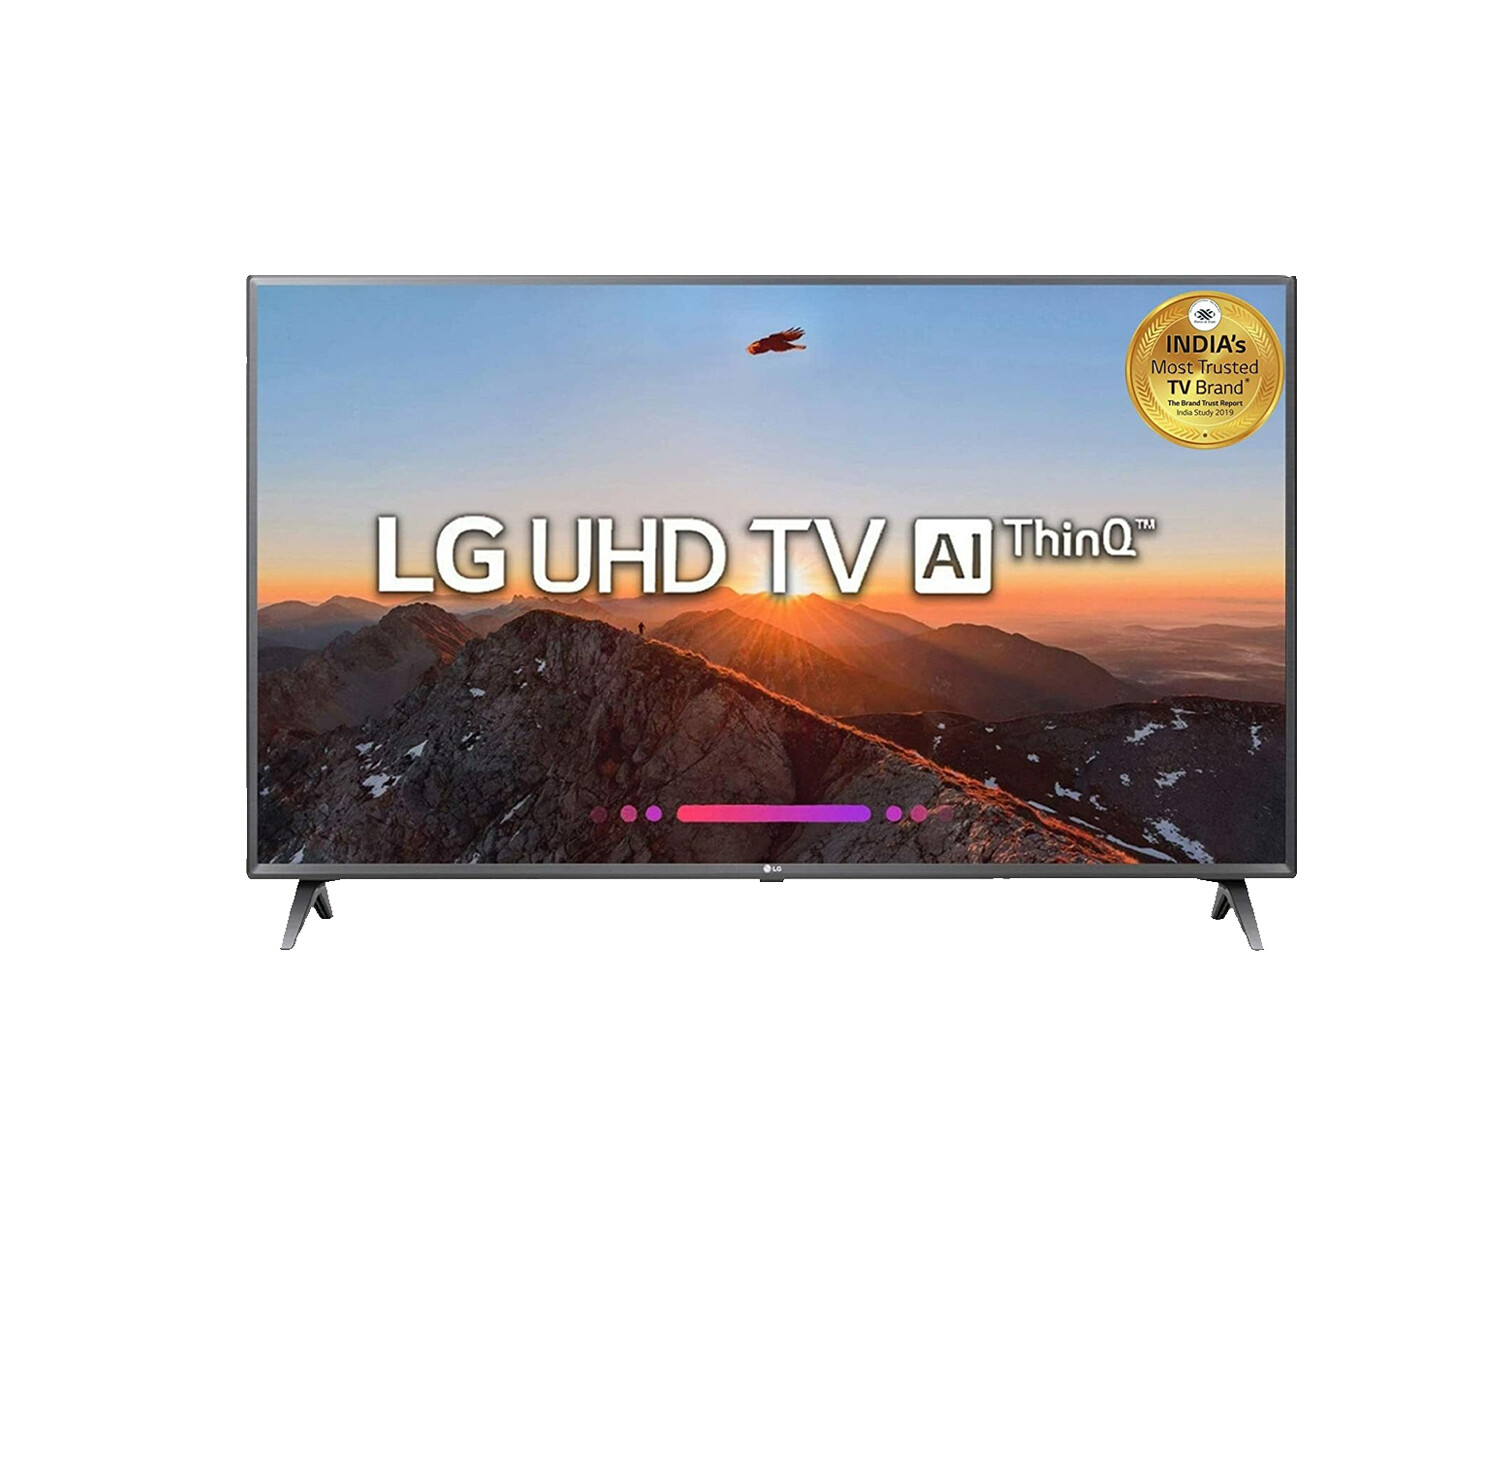 LG 108 cm (43 Inches) 4K UHD LED Smart TV 43UK6360PTE (Black) (2018 model)